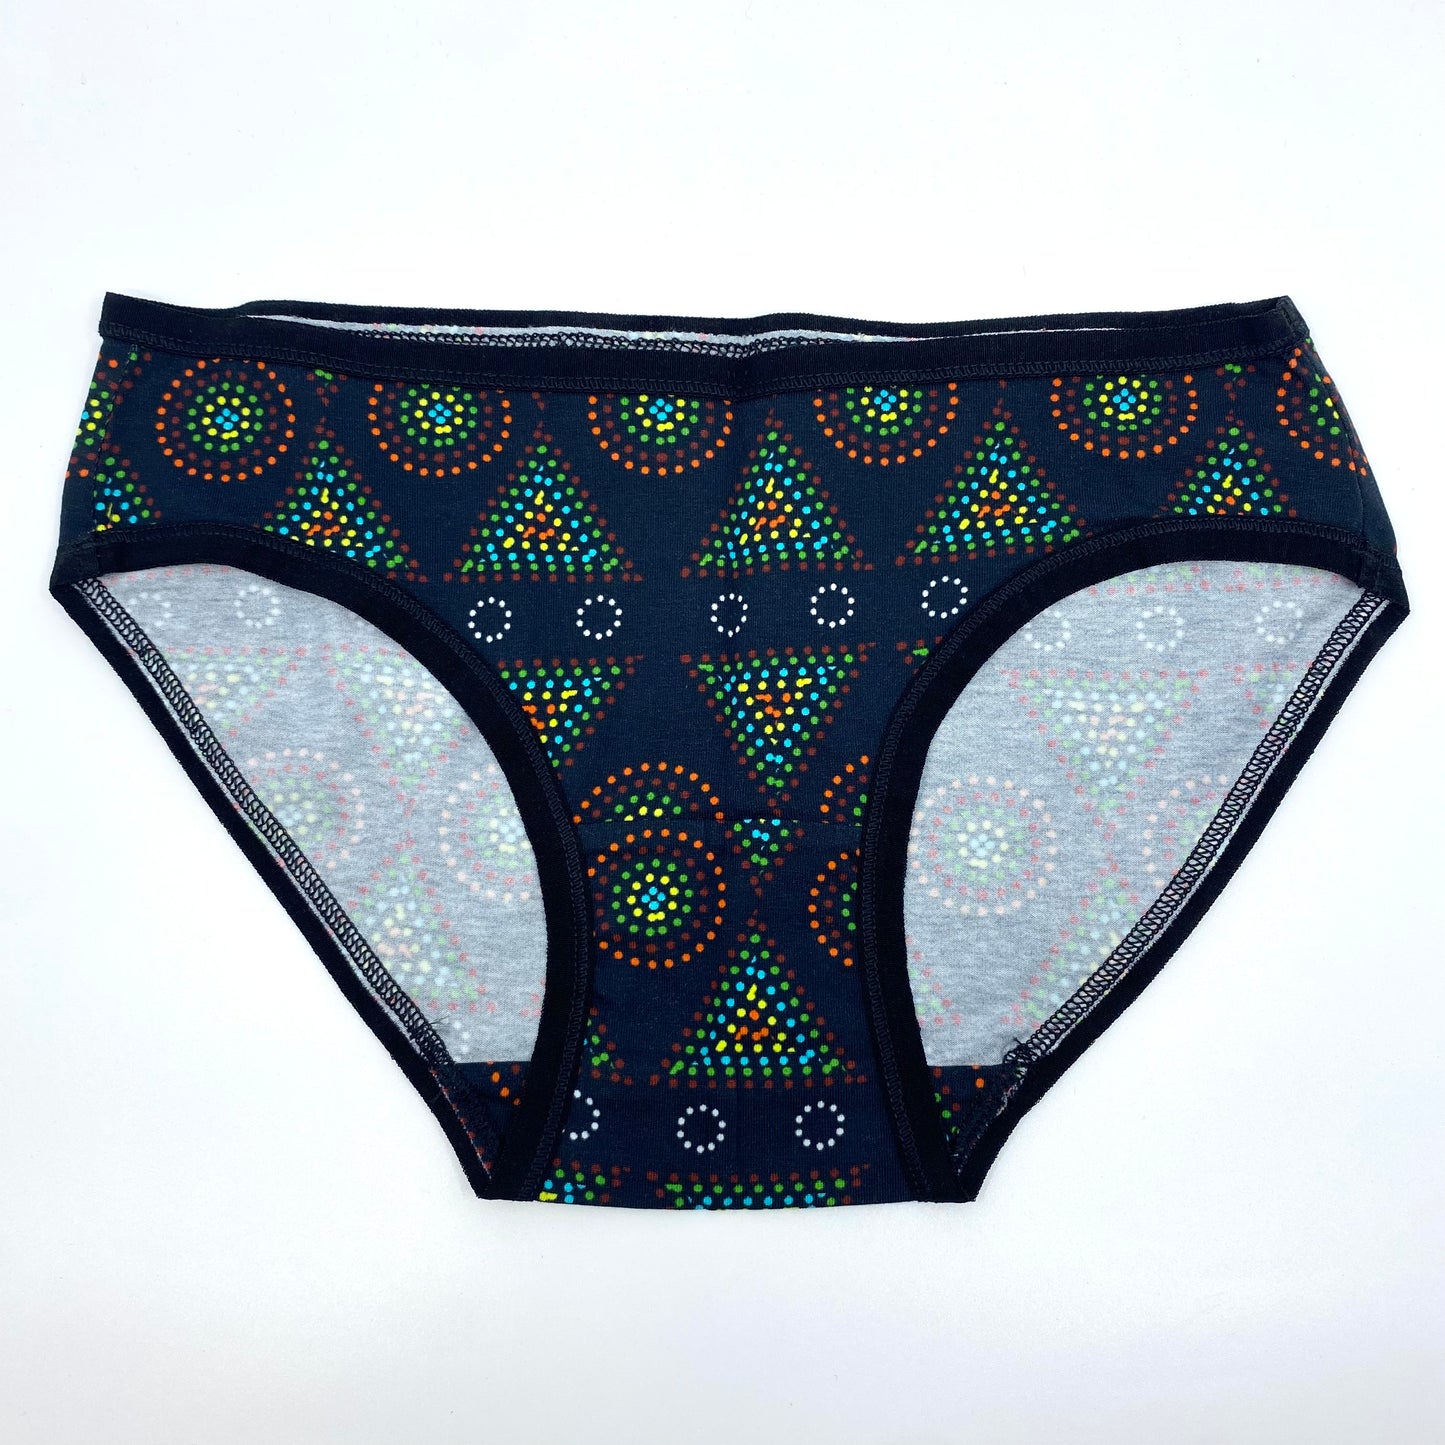 Women's organic cotton low-rise bikini bottoms - Black Mara design